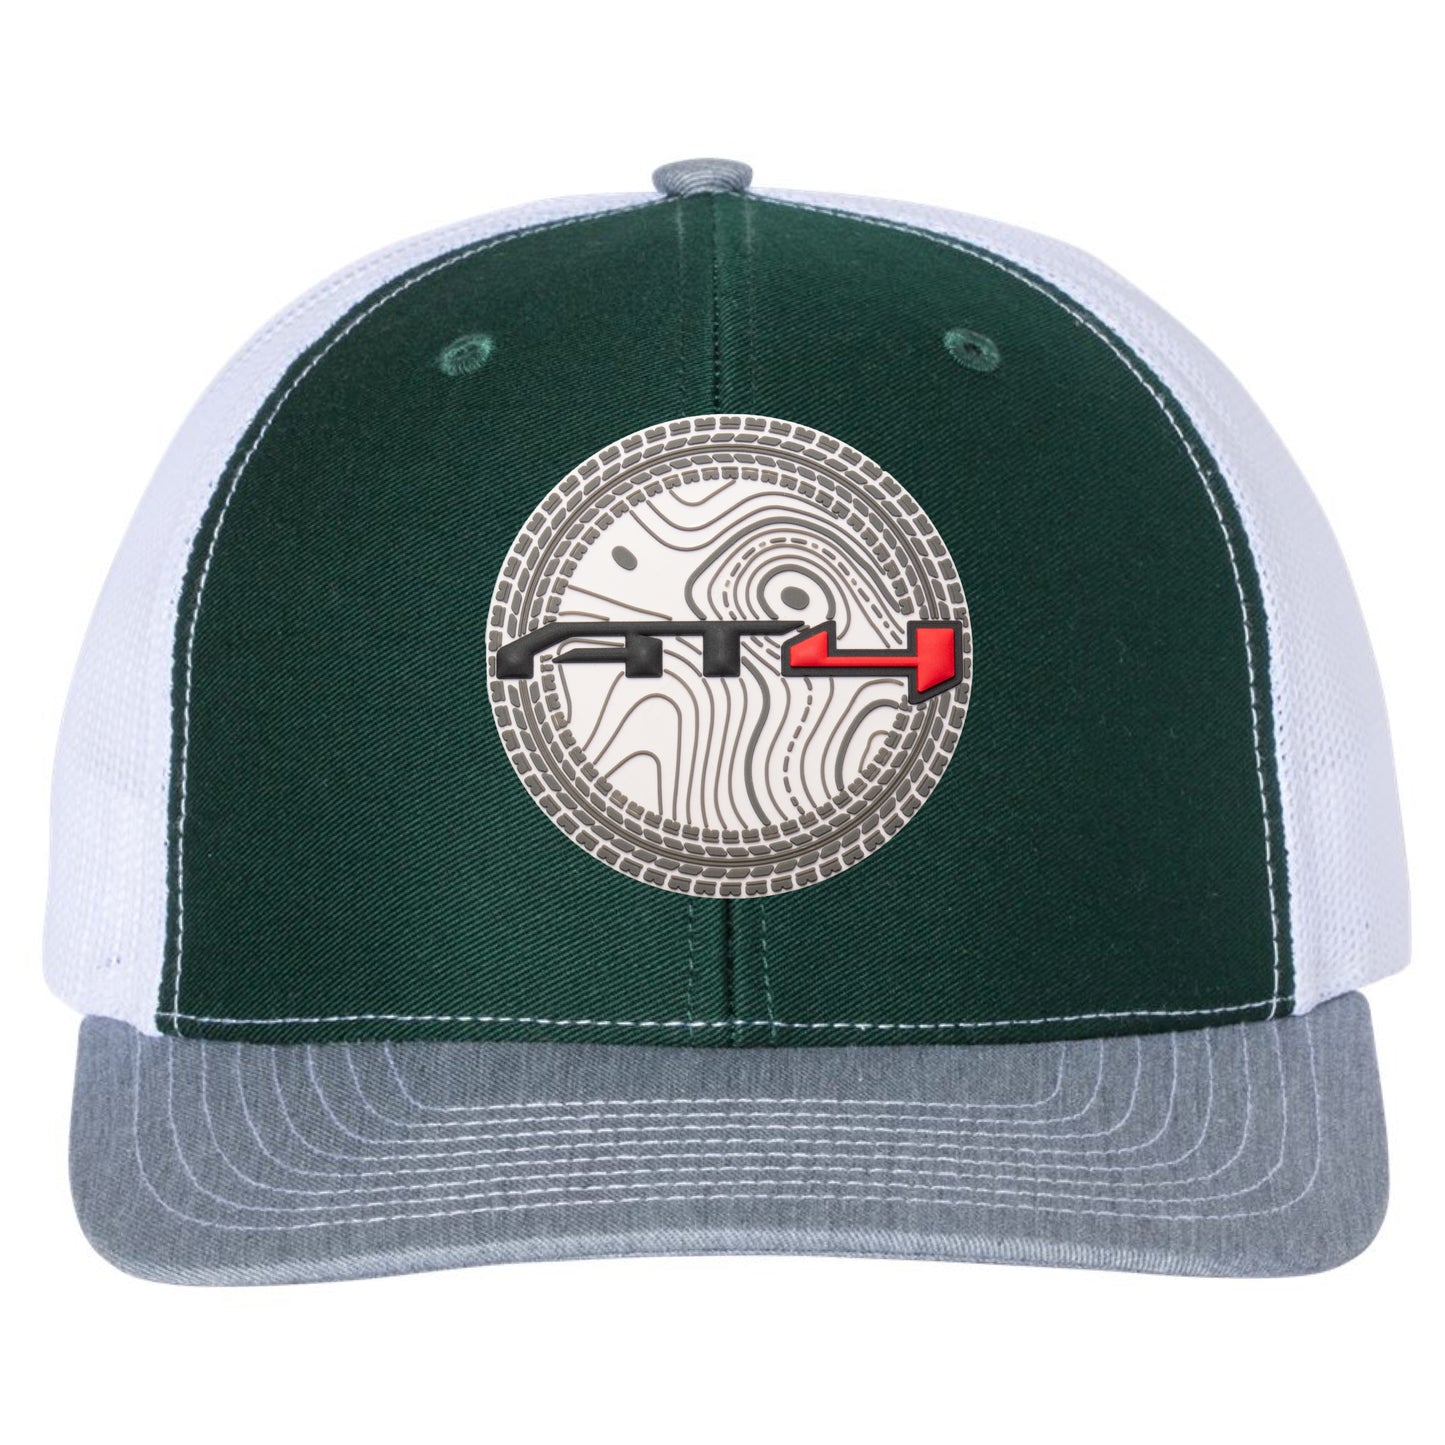 AT4 3D PVC Patch Snapback Trucker Hat- Dark Green/ White/ Heather Grey - Ten Gallon Hat Co.